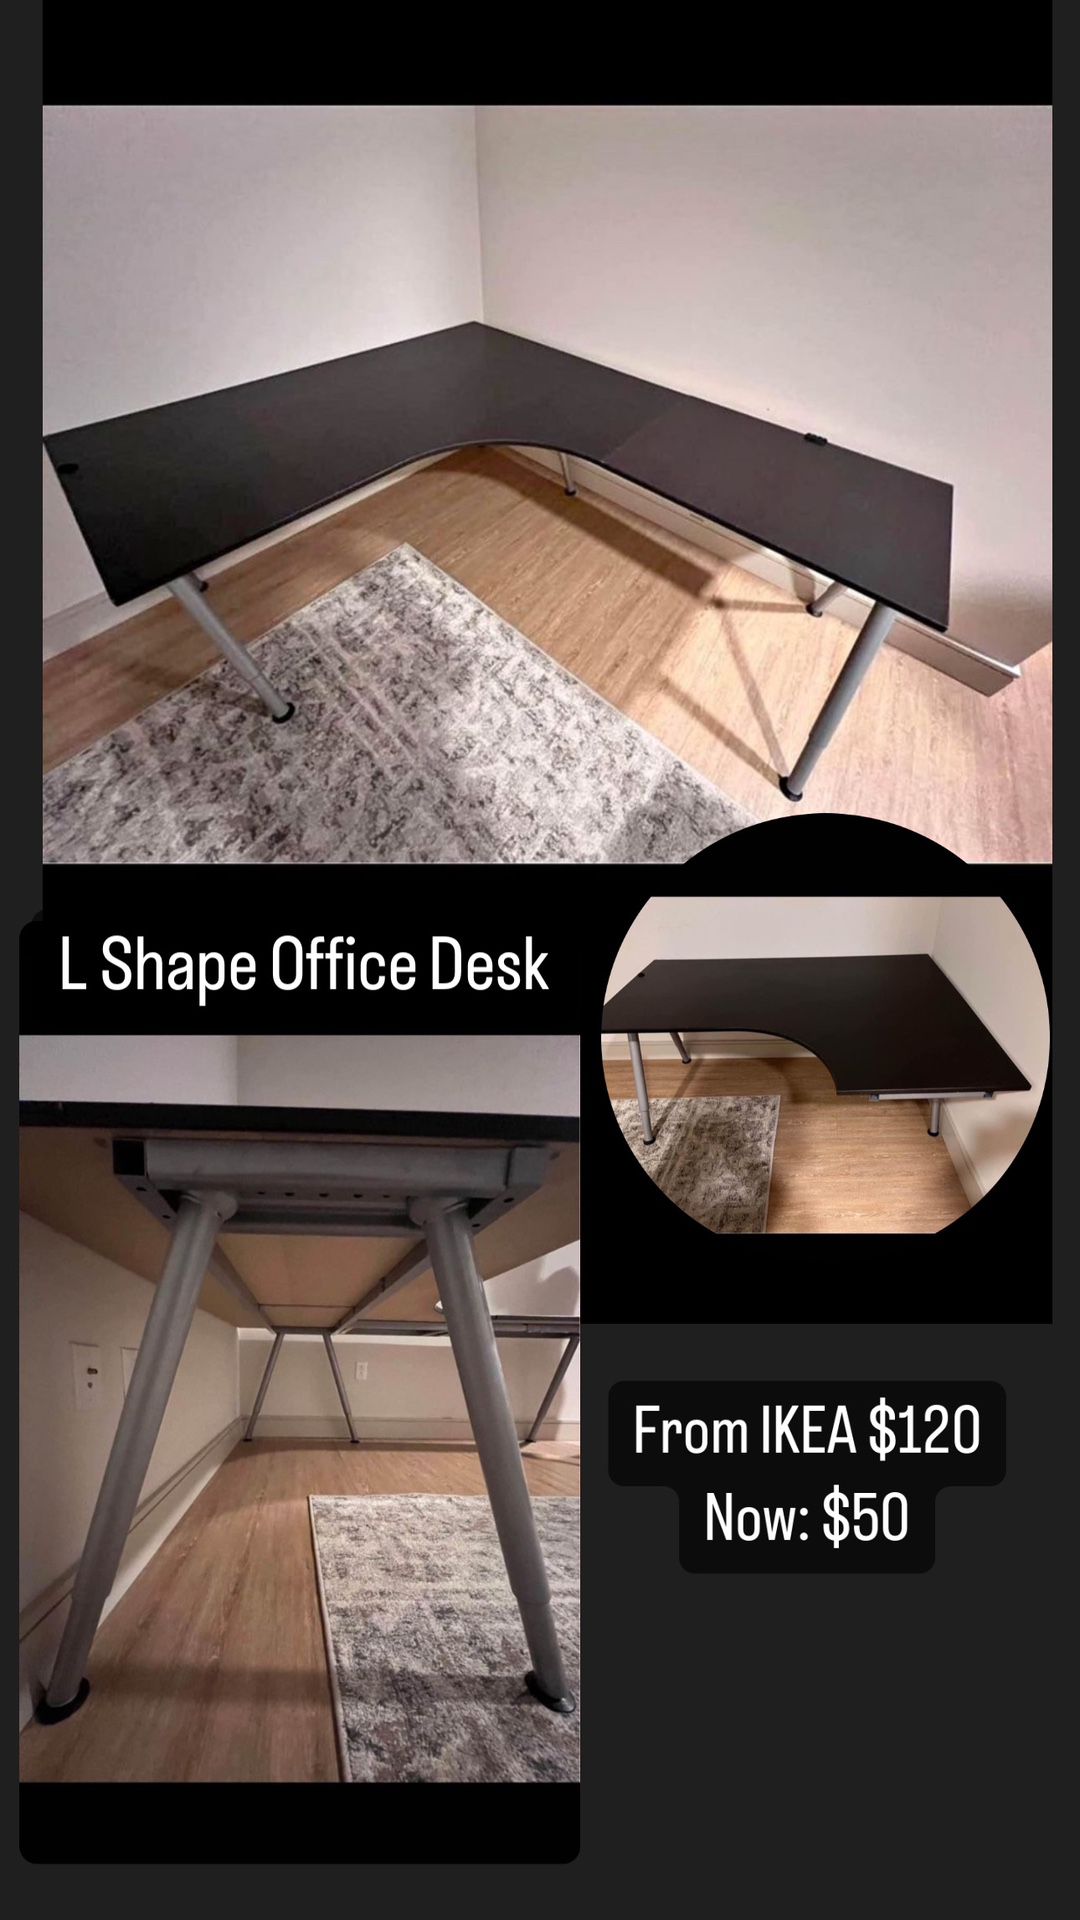 L shape Office desk